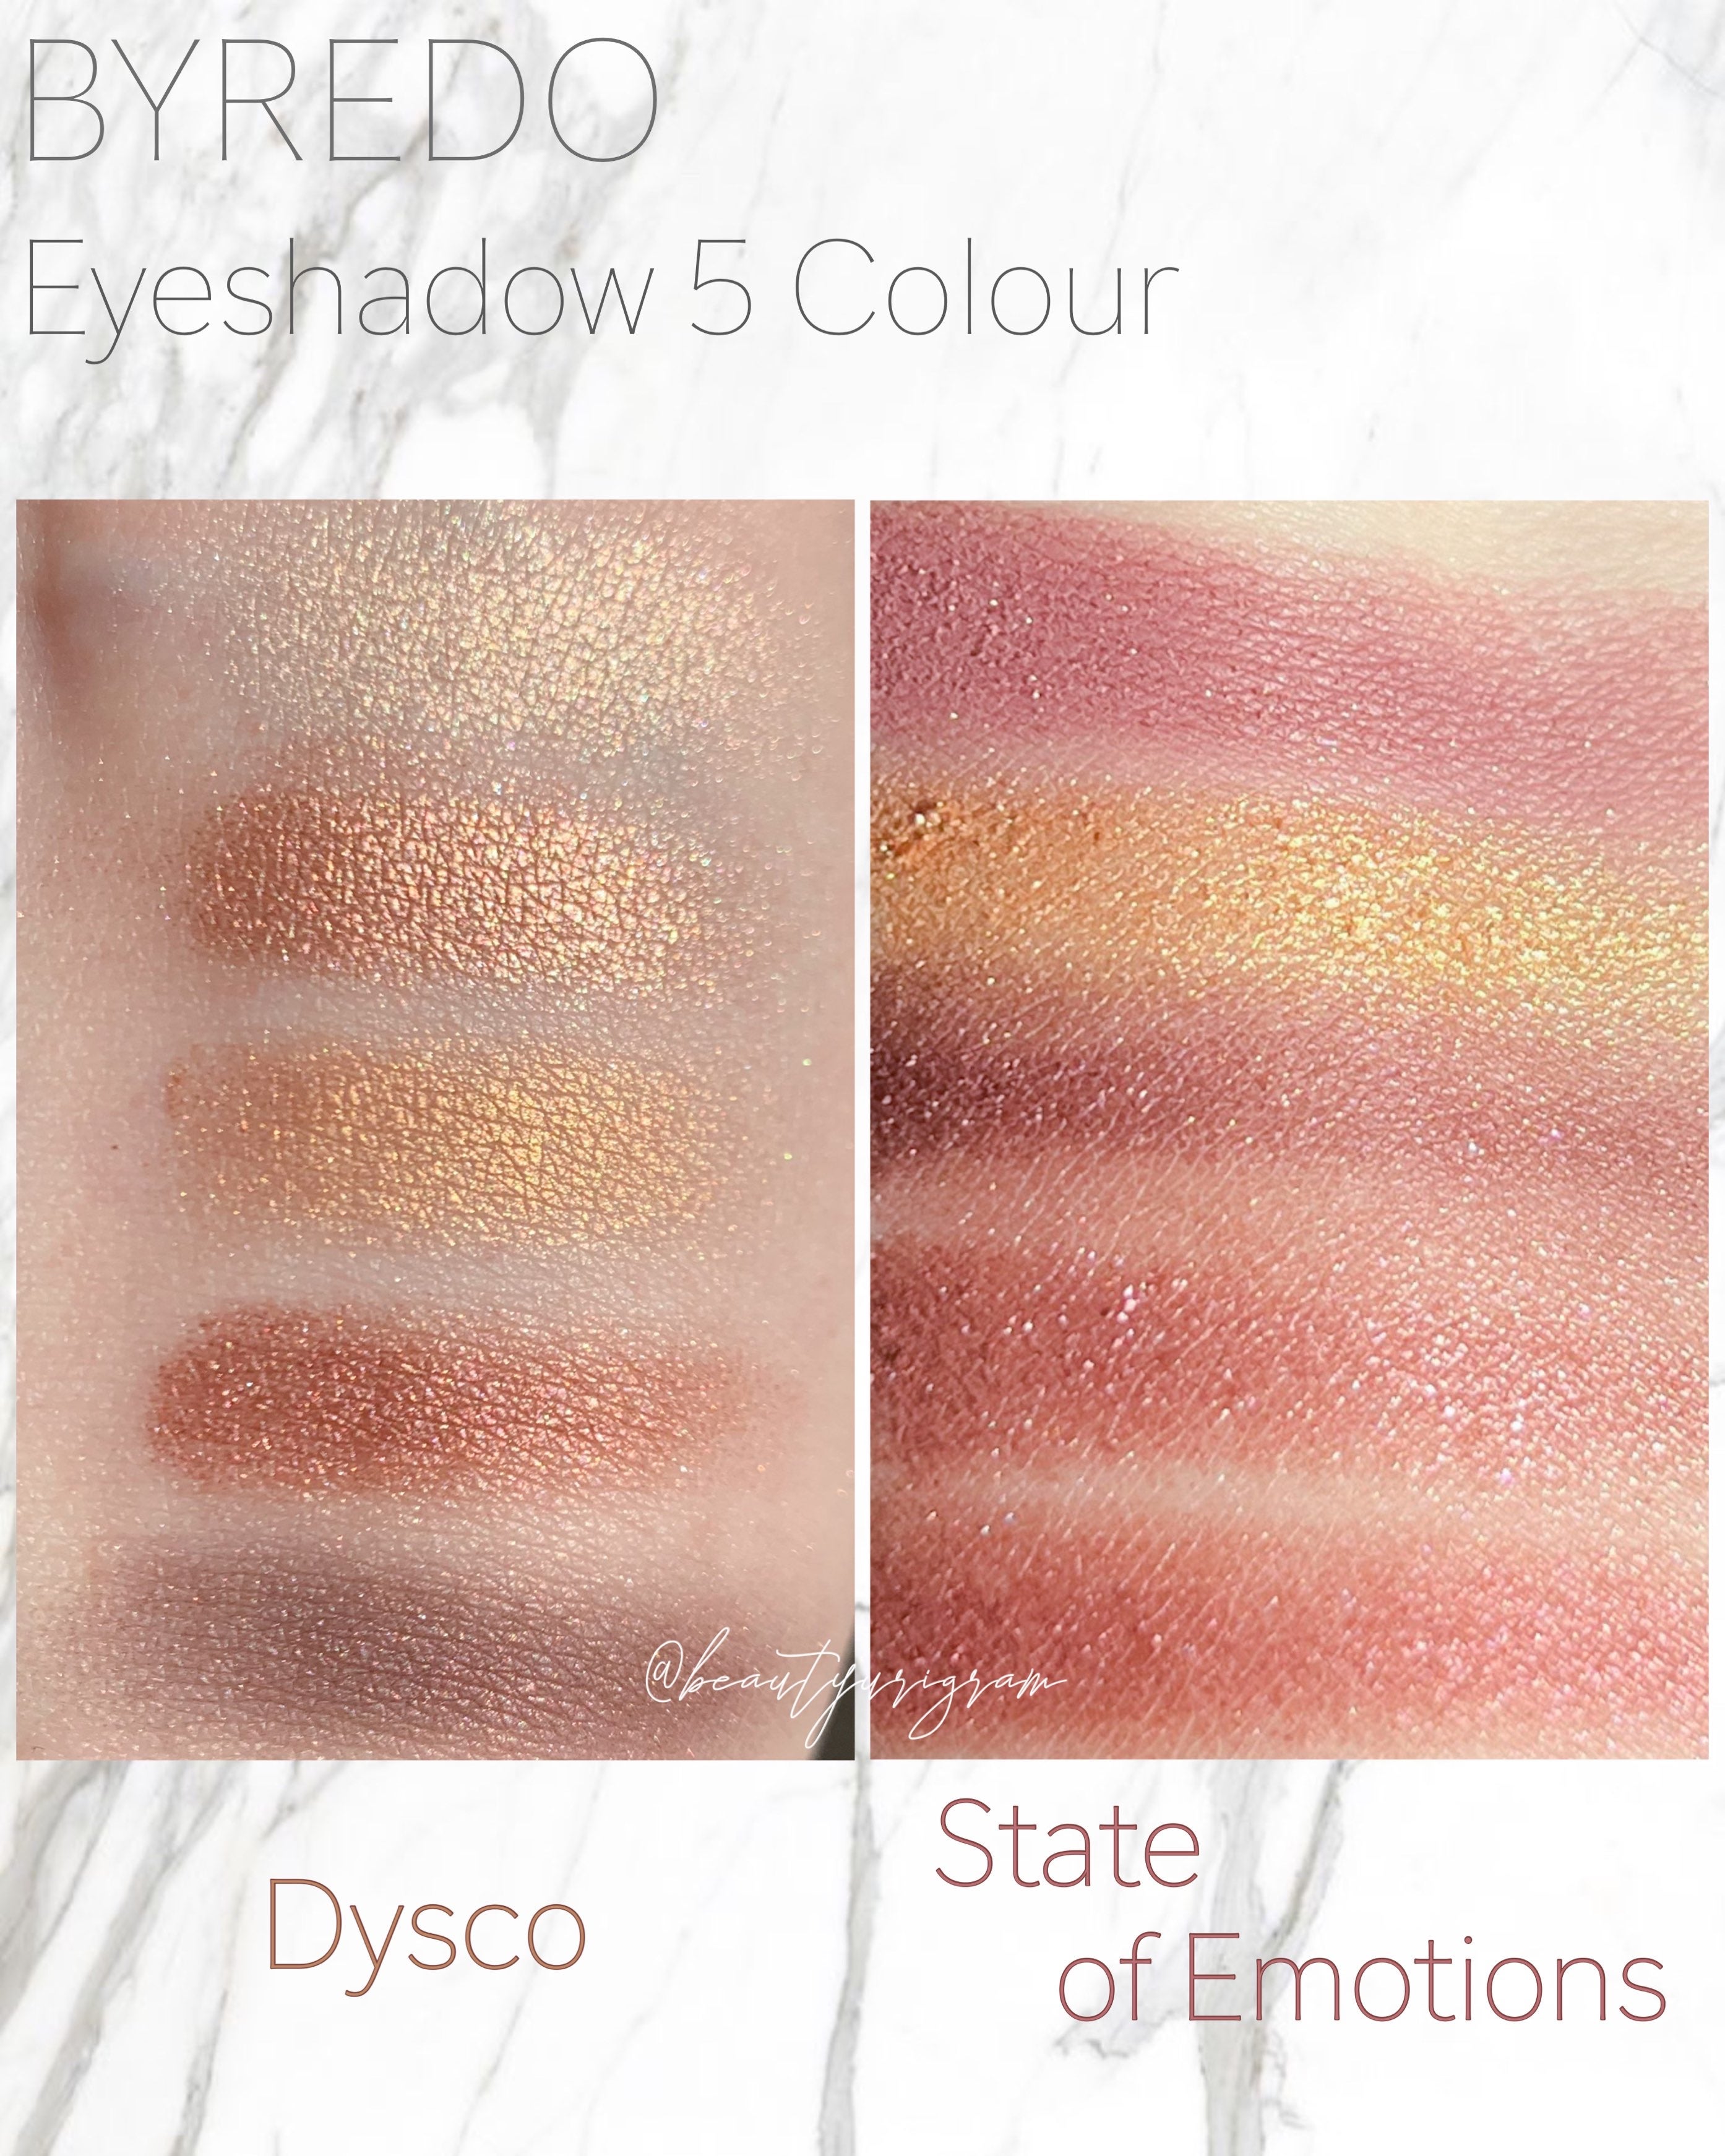 BYREDO】Eyeshadow 5 Colour - State of Emotions | LiFE Scrapbook